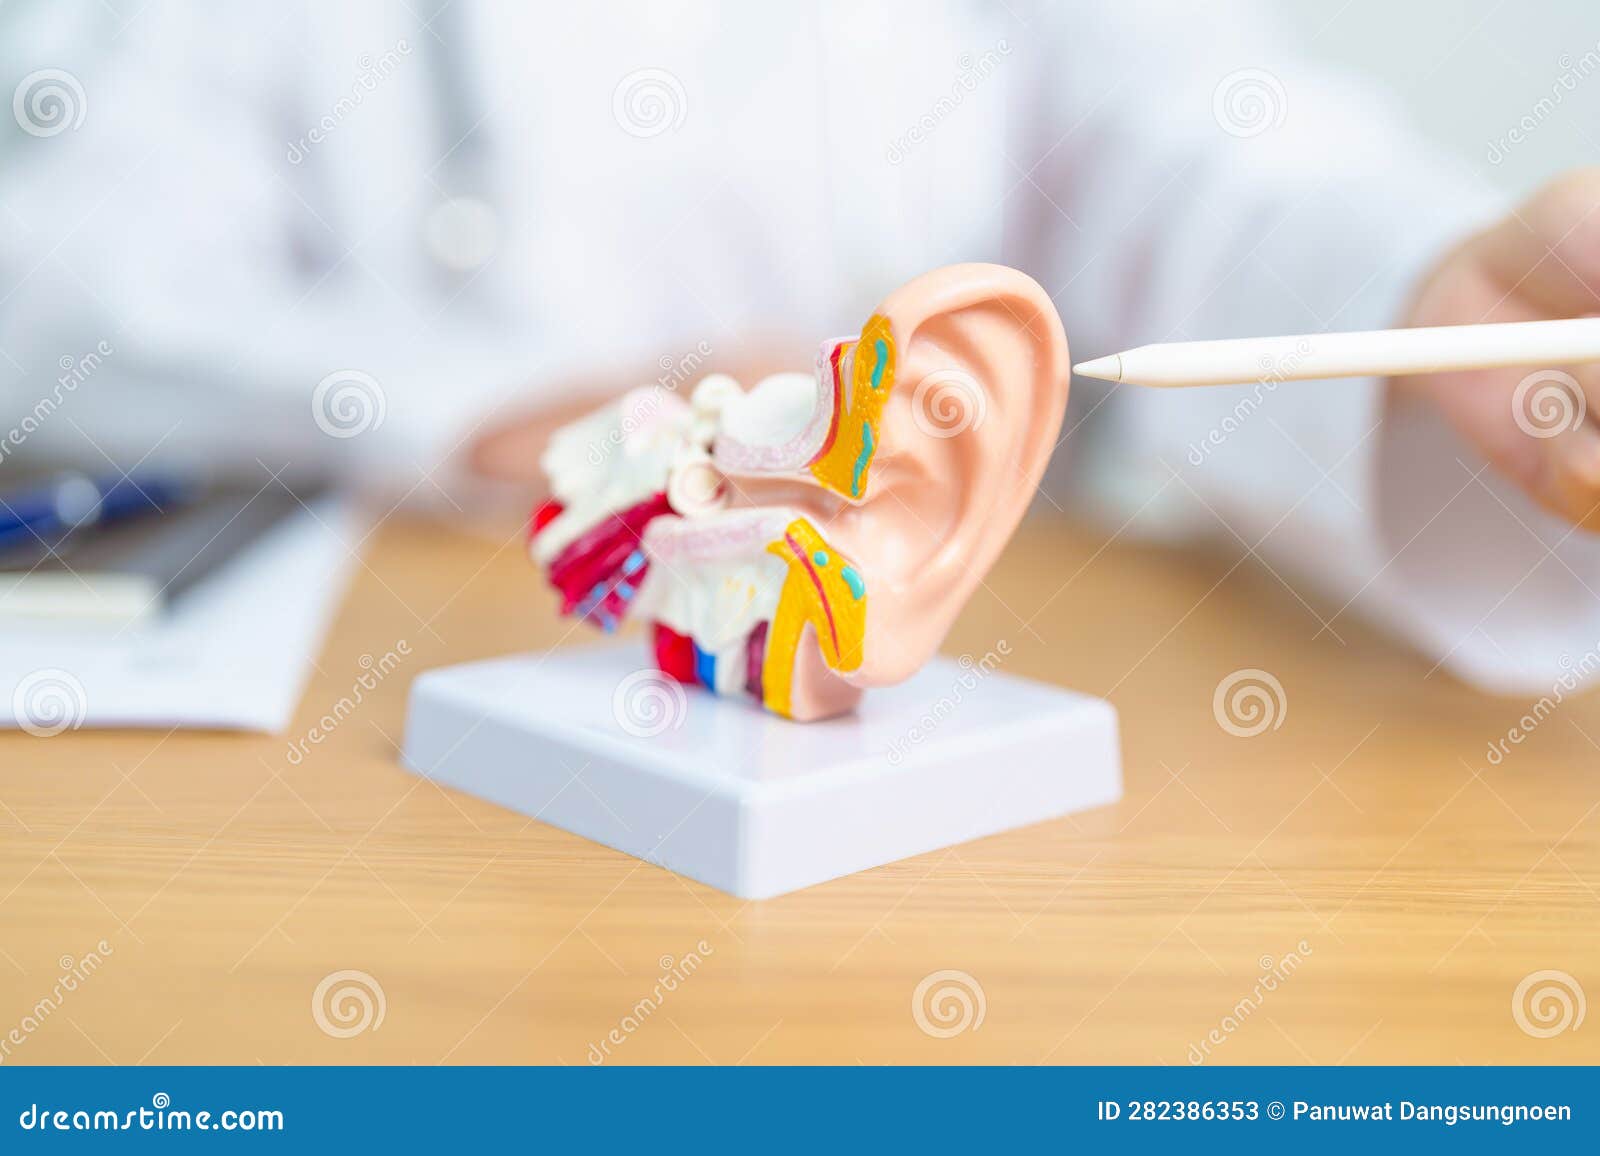 doctor with human ear anatomy model. ear disease, atresia, otitis media, pertorated eardrum, meniere syndrome, otolaryngologist,